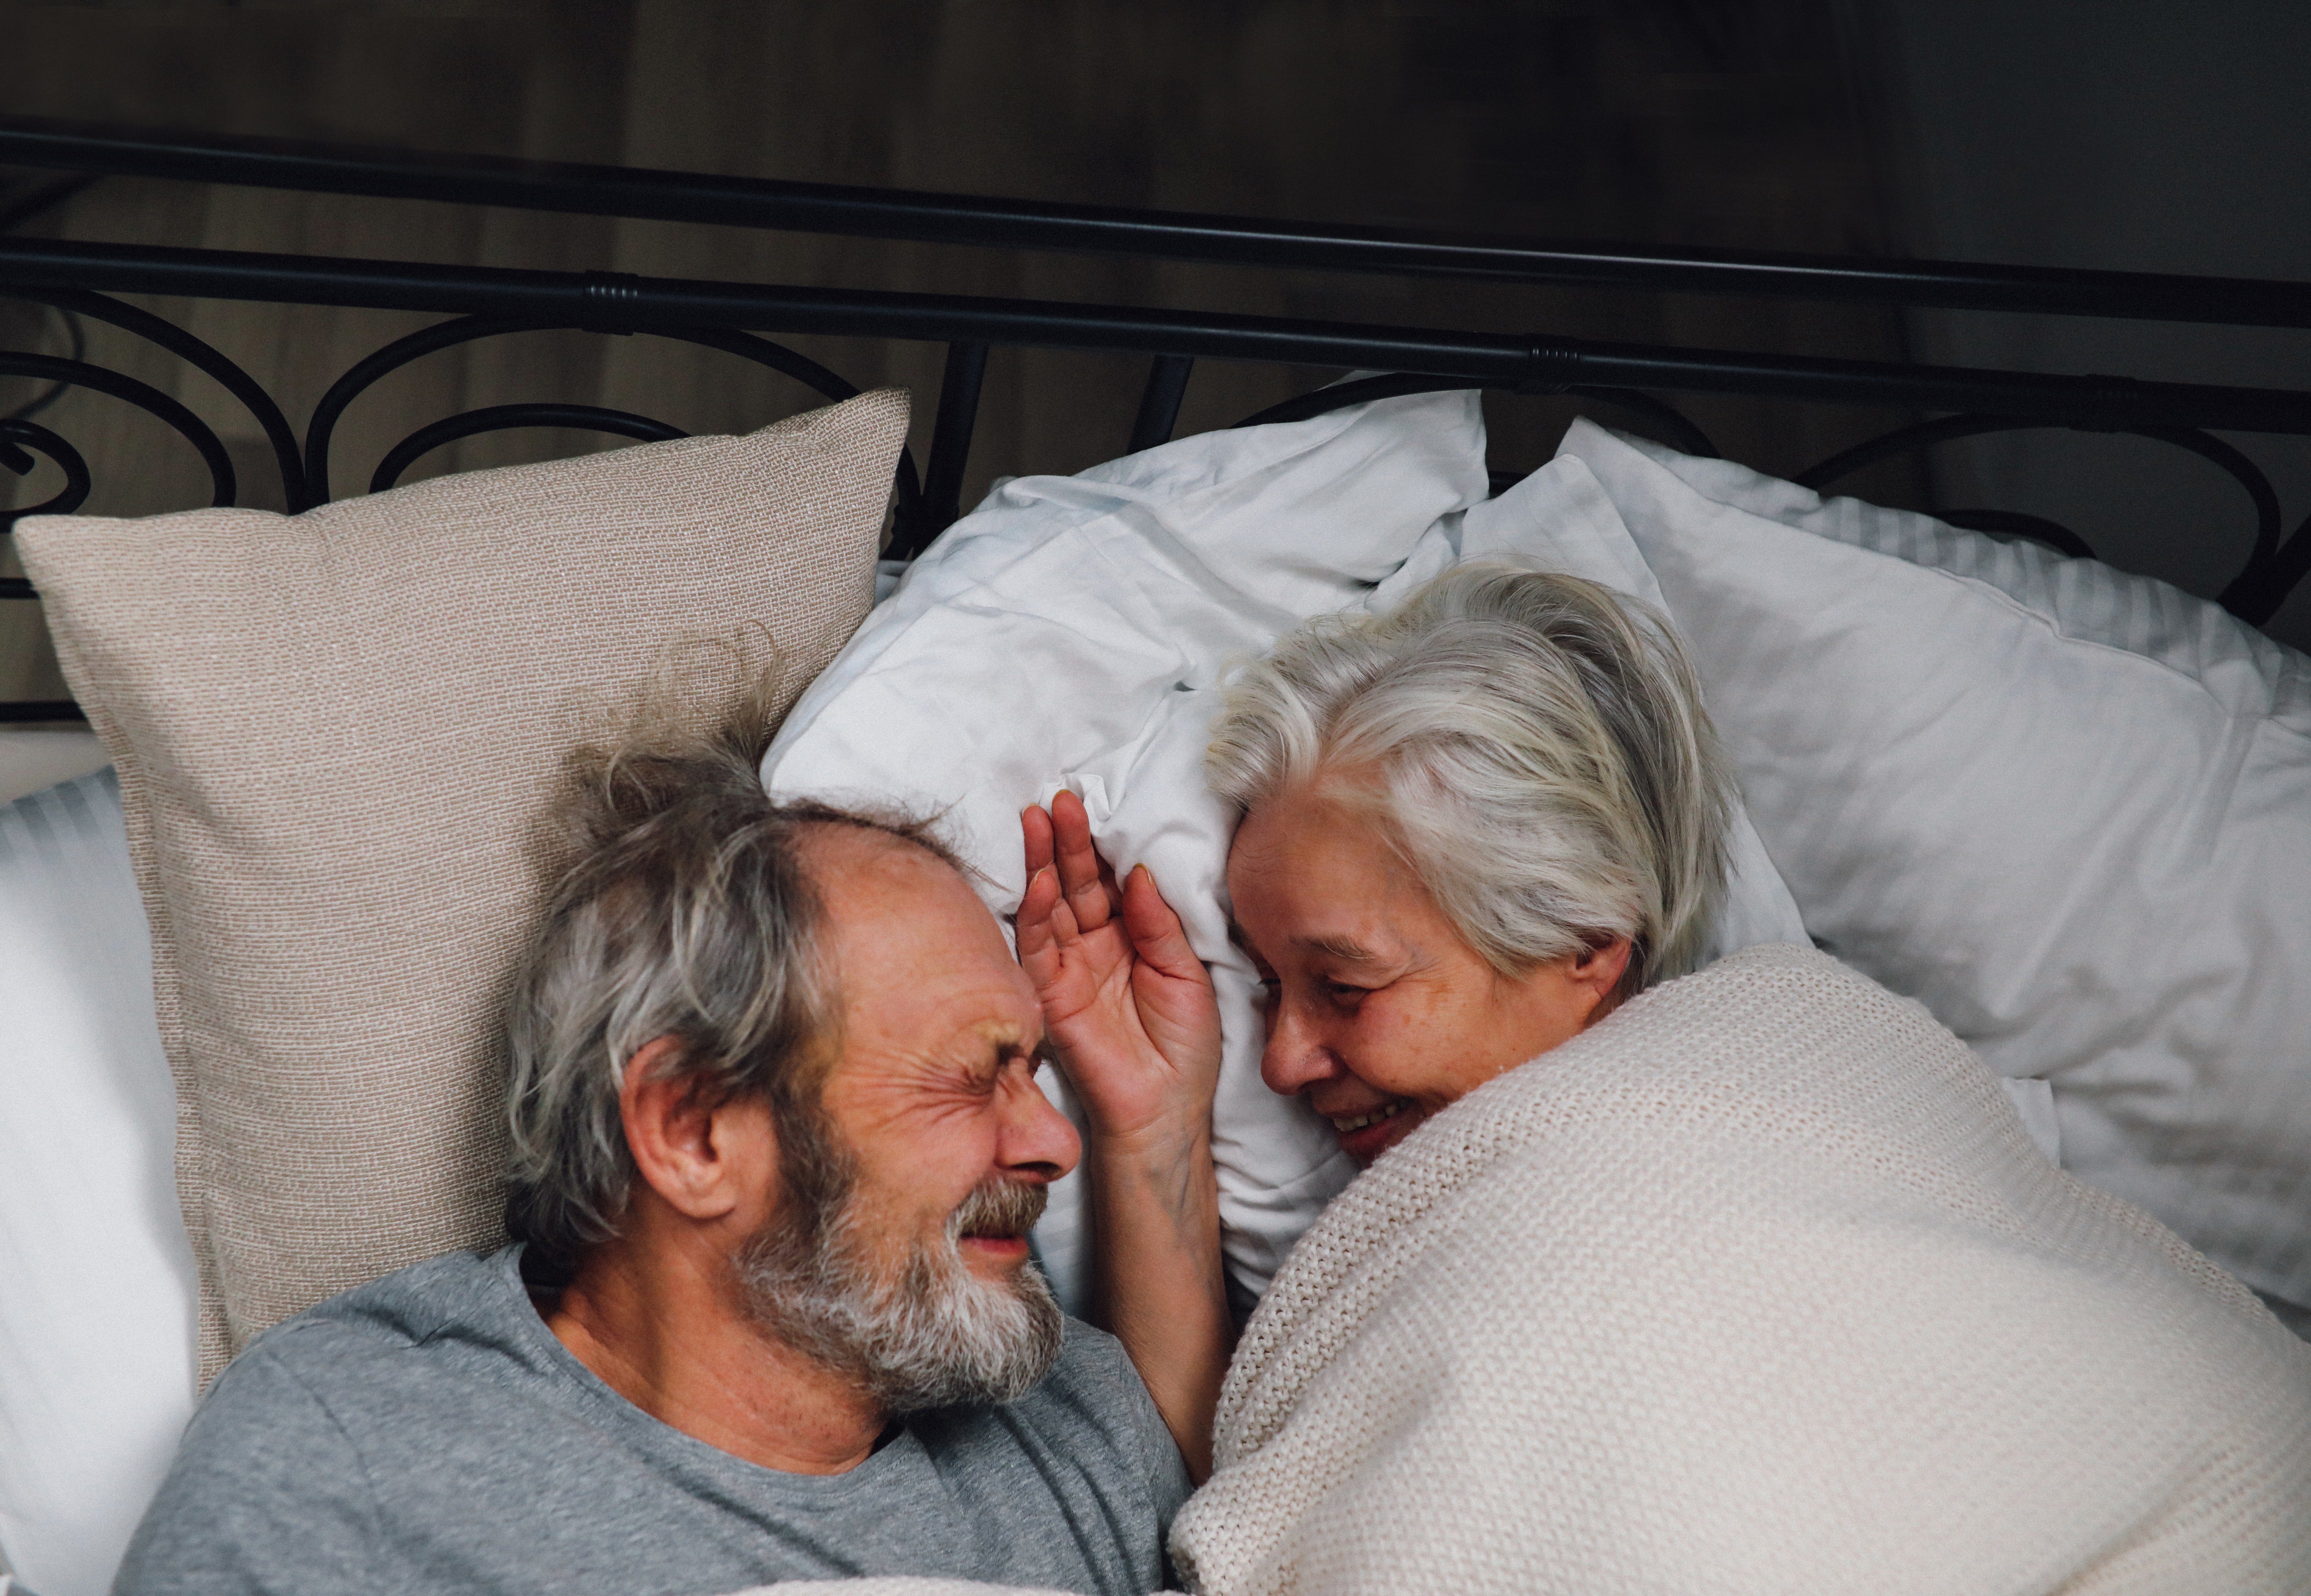 OP's grandparents shared the same bed despite the grandpa's illness | Photo: Pexels 